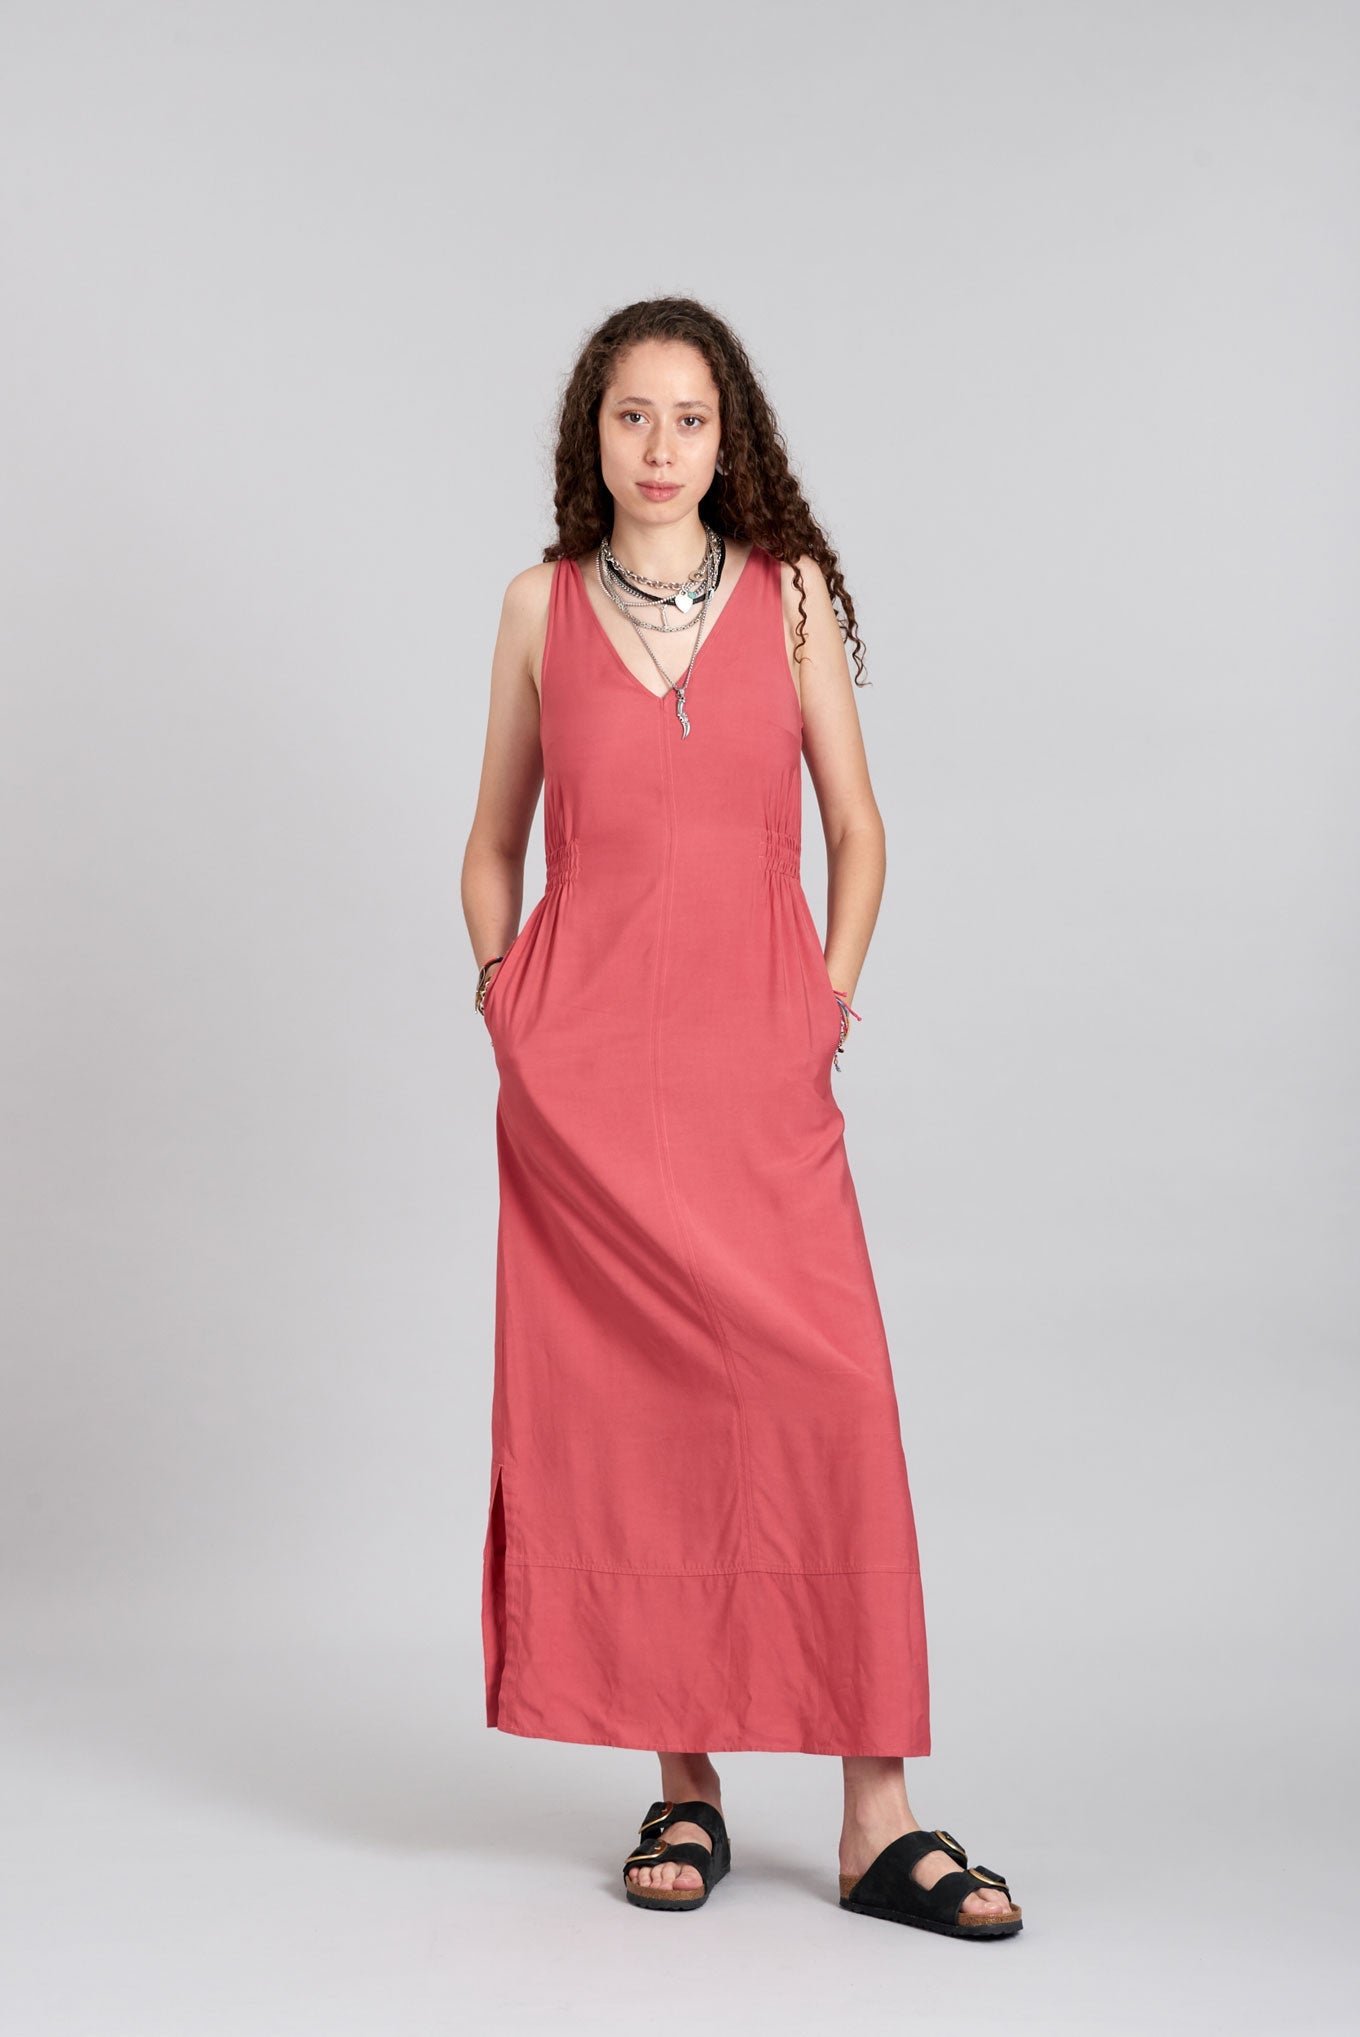 MARNIE - Rayon Dress Pink